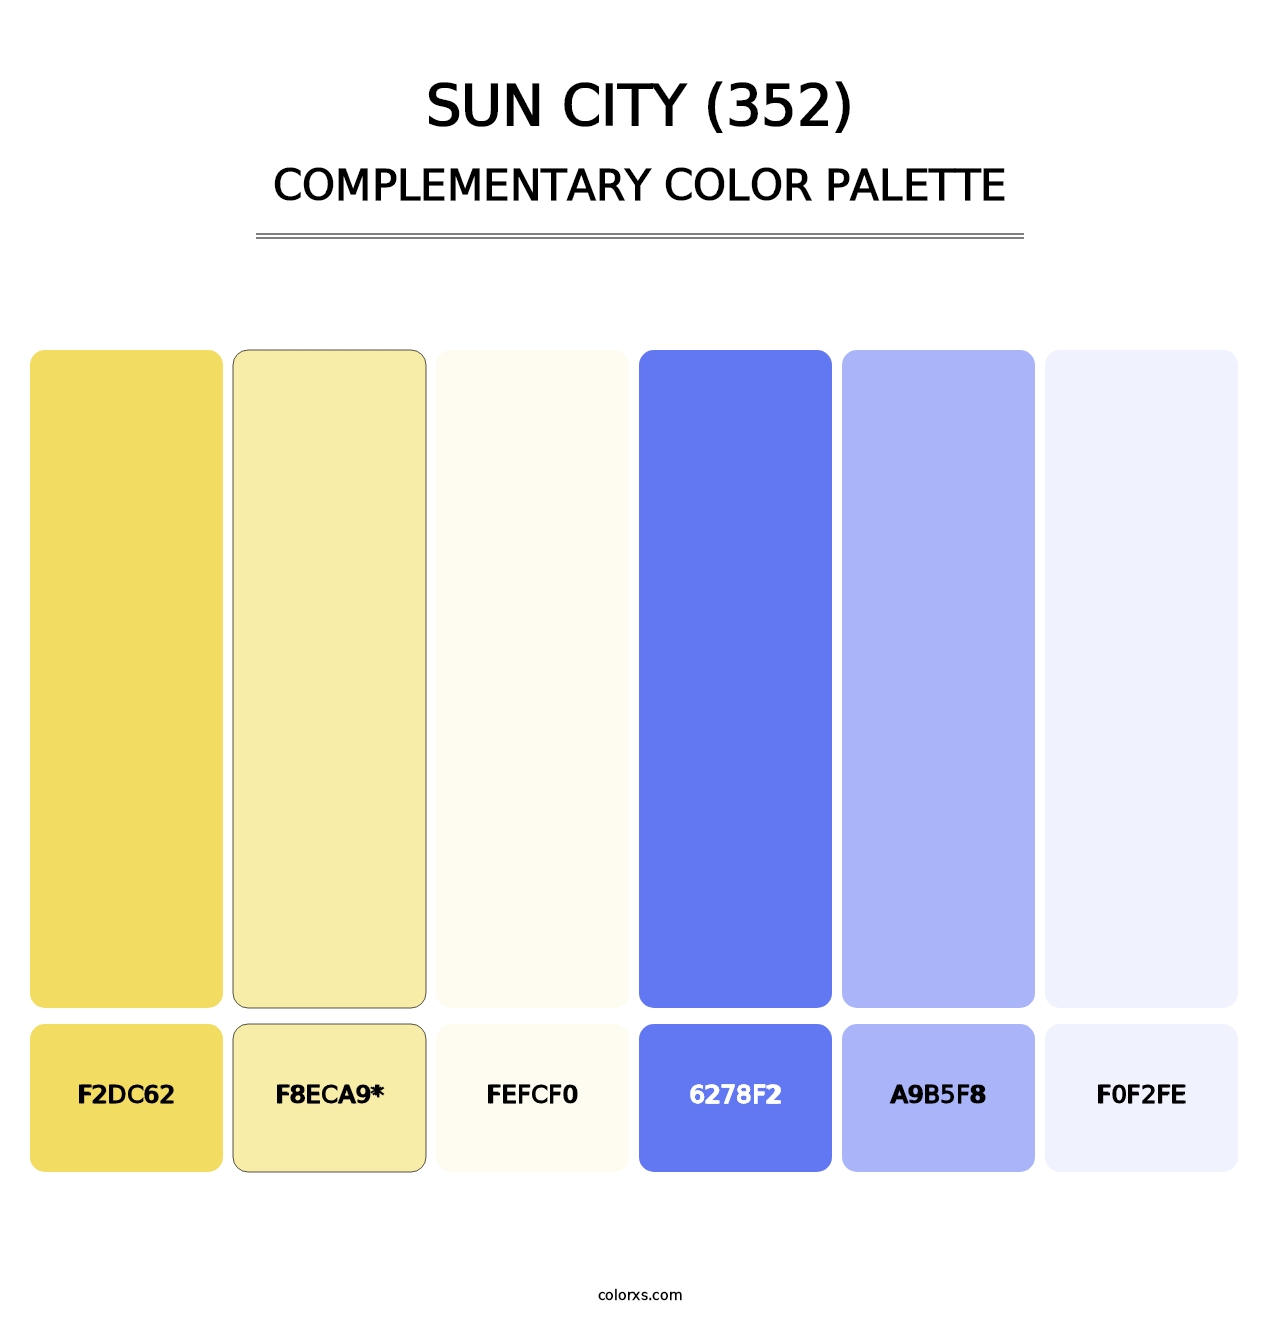 Sun City (352) - Complementary Color Palette